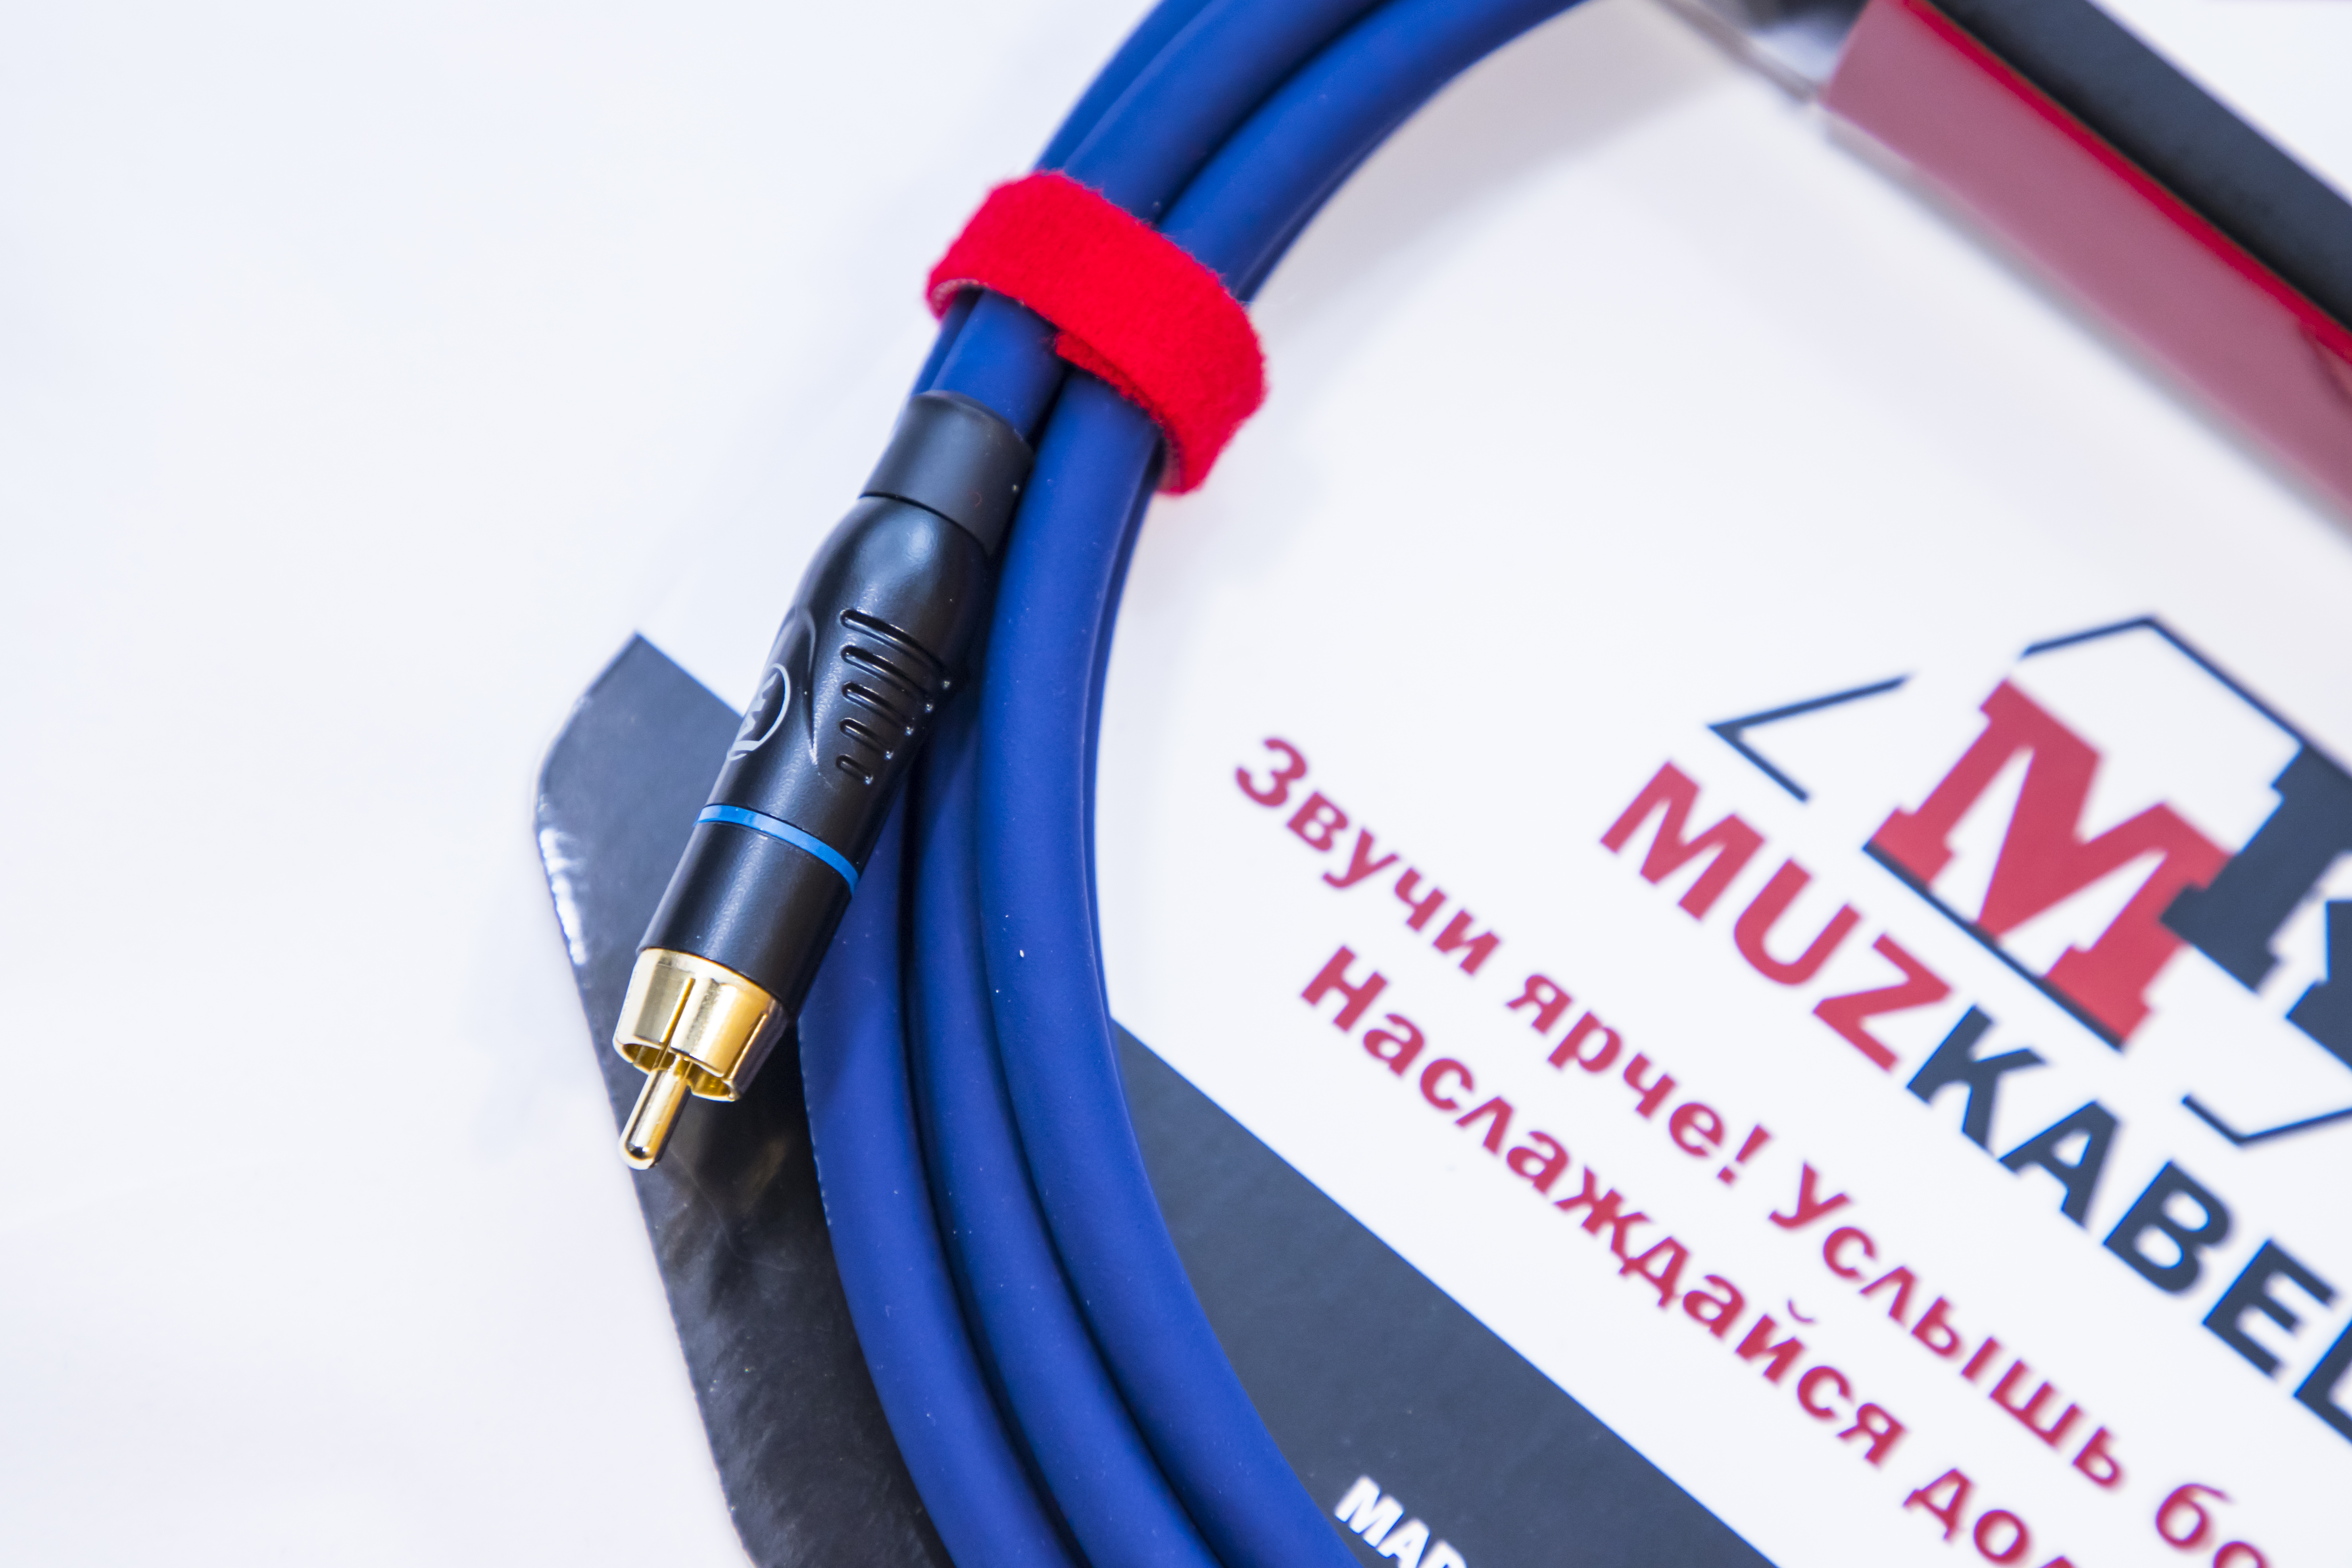 Аудио кабель MUZKABEL RSFIK4S - 4,5 метра, RCA – RCA